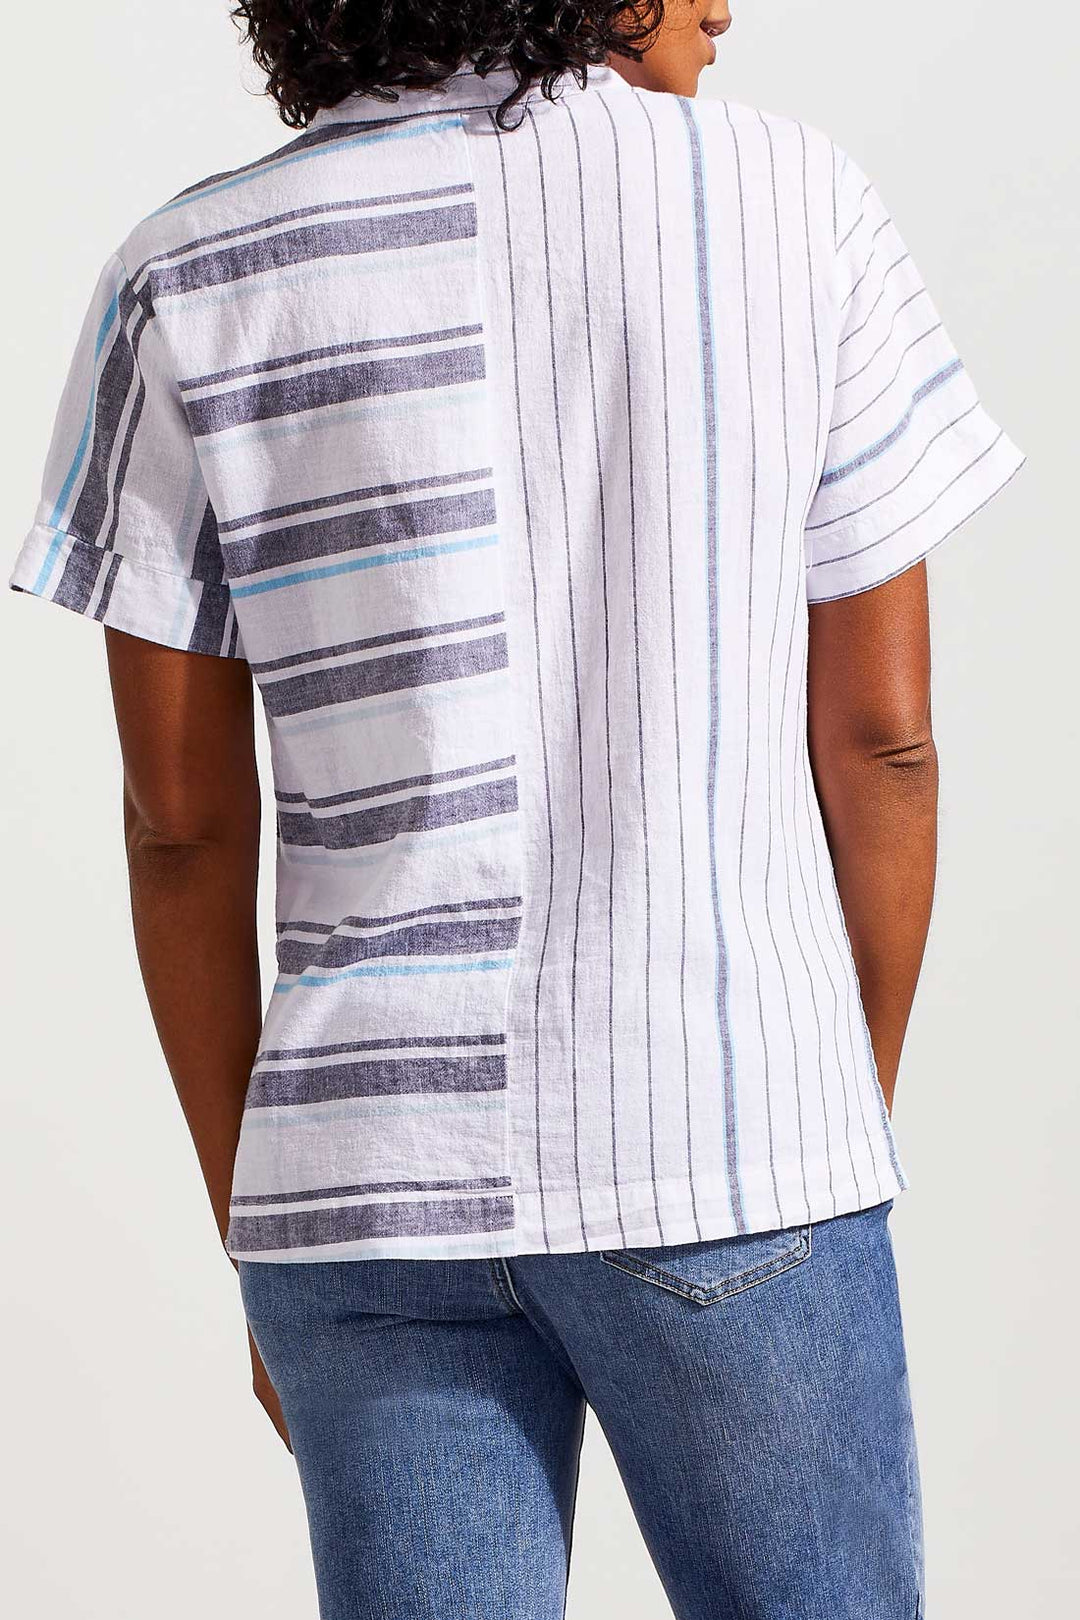 Short Sleeve ButtonUp Multi Stripe Shirt